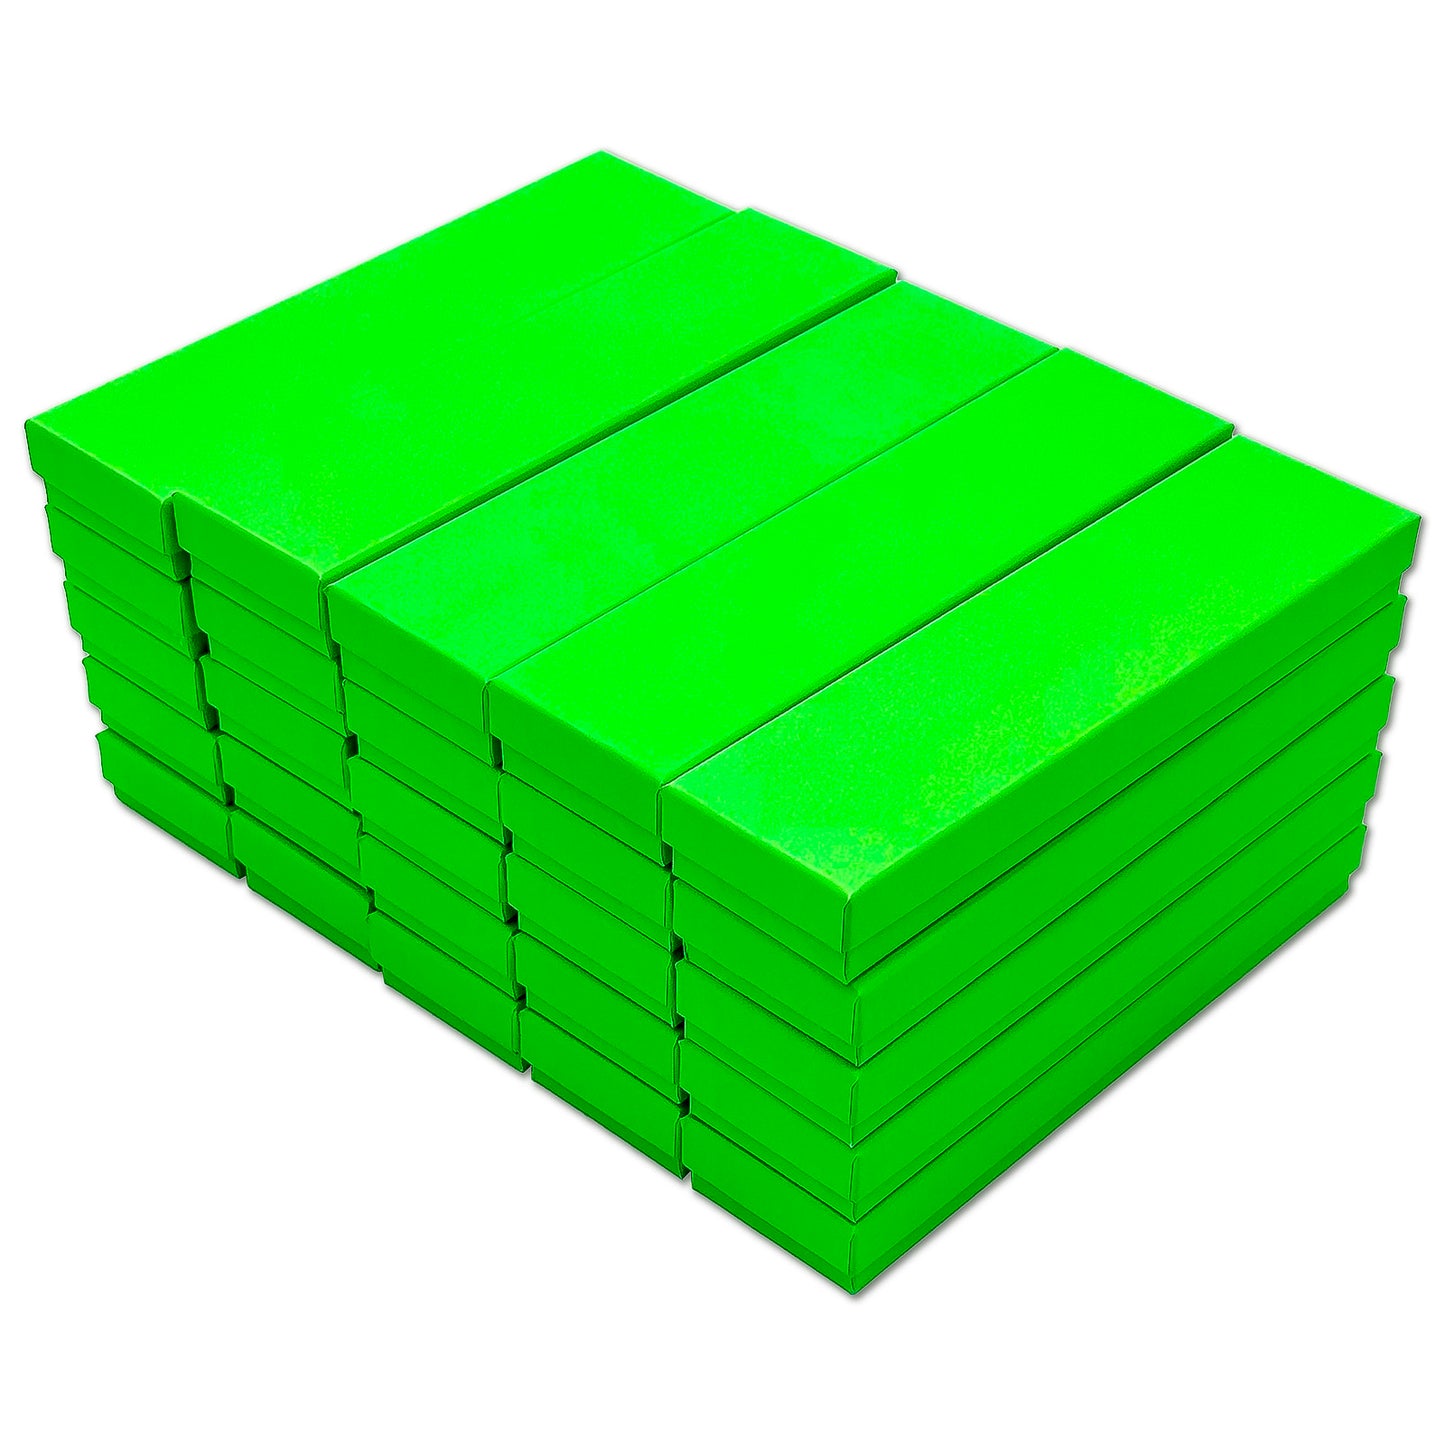 8" x 2" x 1" Neon Green Cotton Filled Box